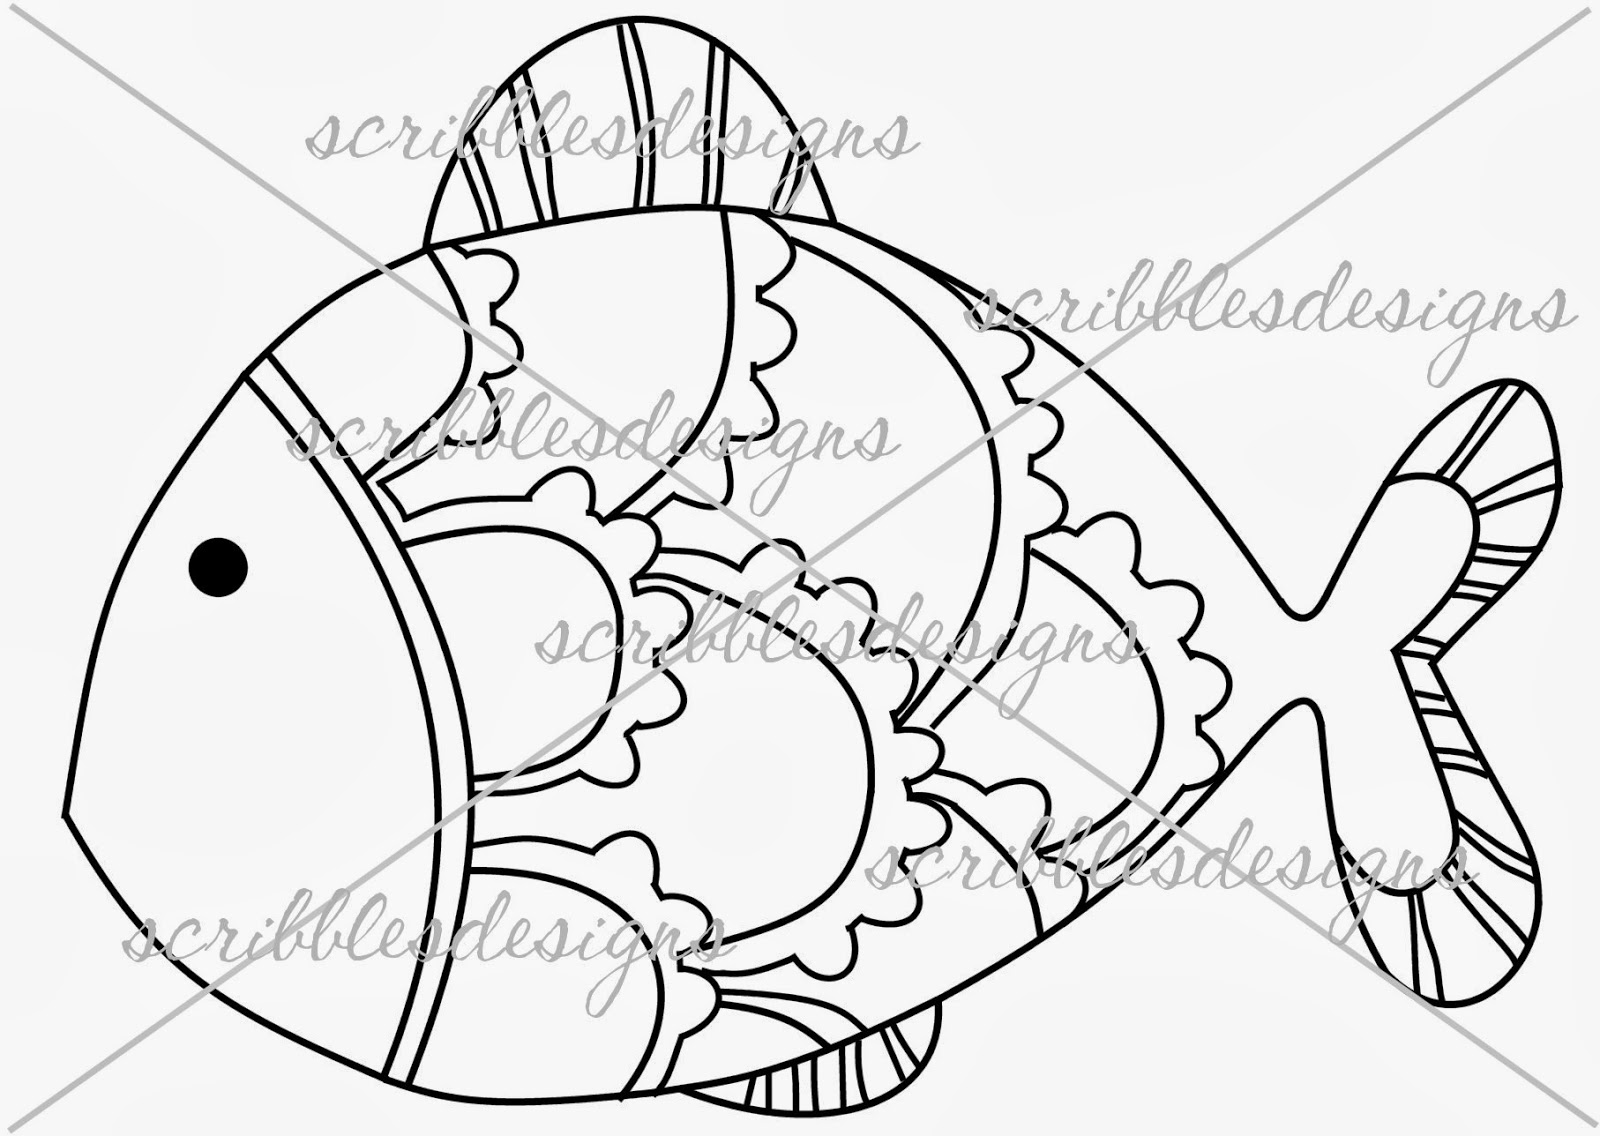 http://buyscribblesdesigns.blogspot.ca/2013/08/316-tropical-fish-5-200.html